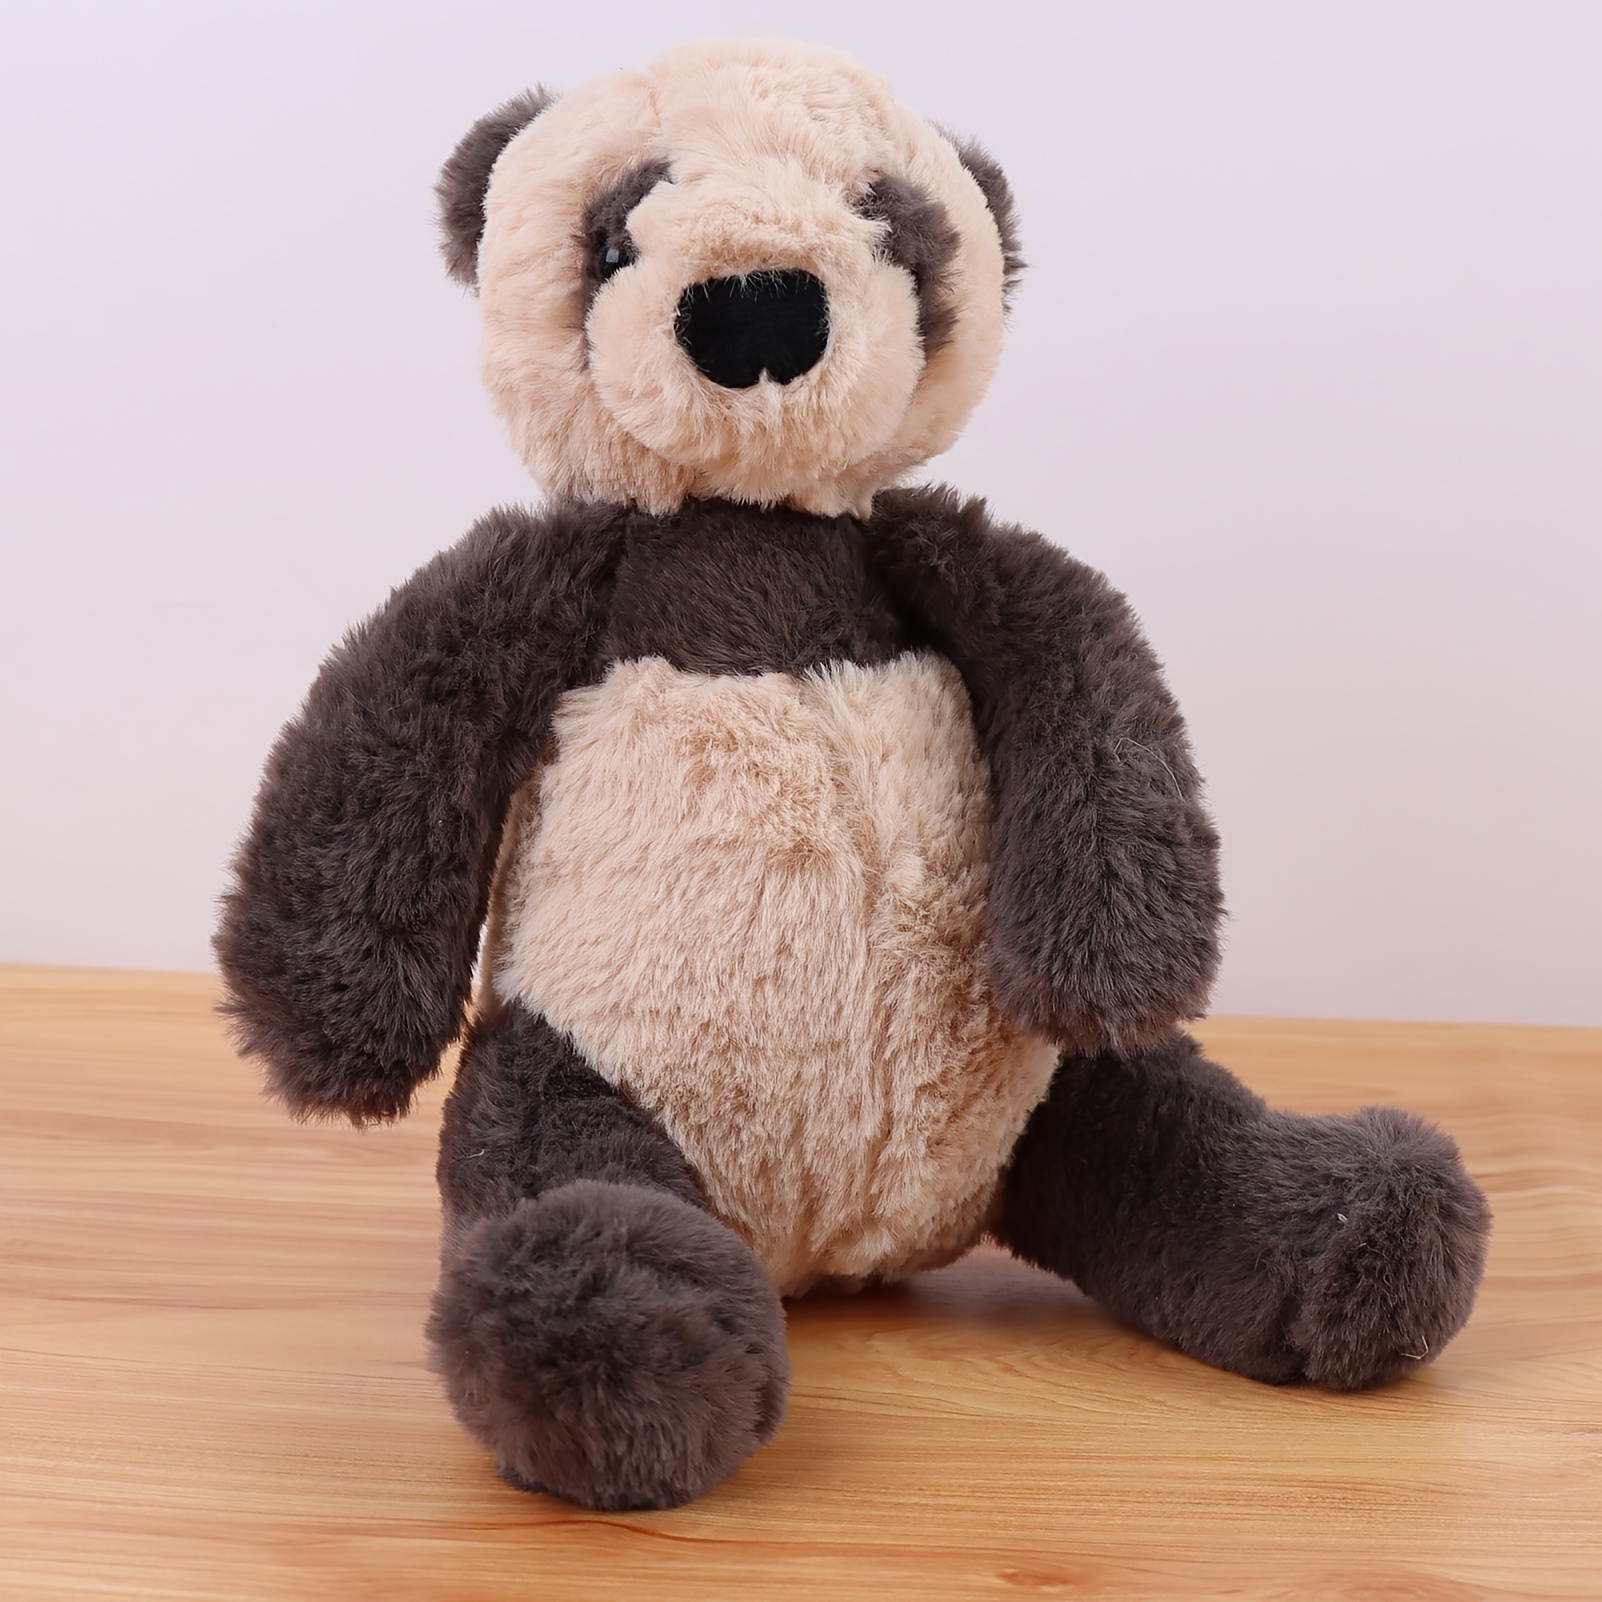 18cm 7 09in Panda Stuffed Animal Soft Plush Toy, Baby Birthday Christmas Gifts Present Stuffed Toys